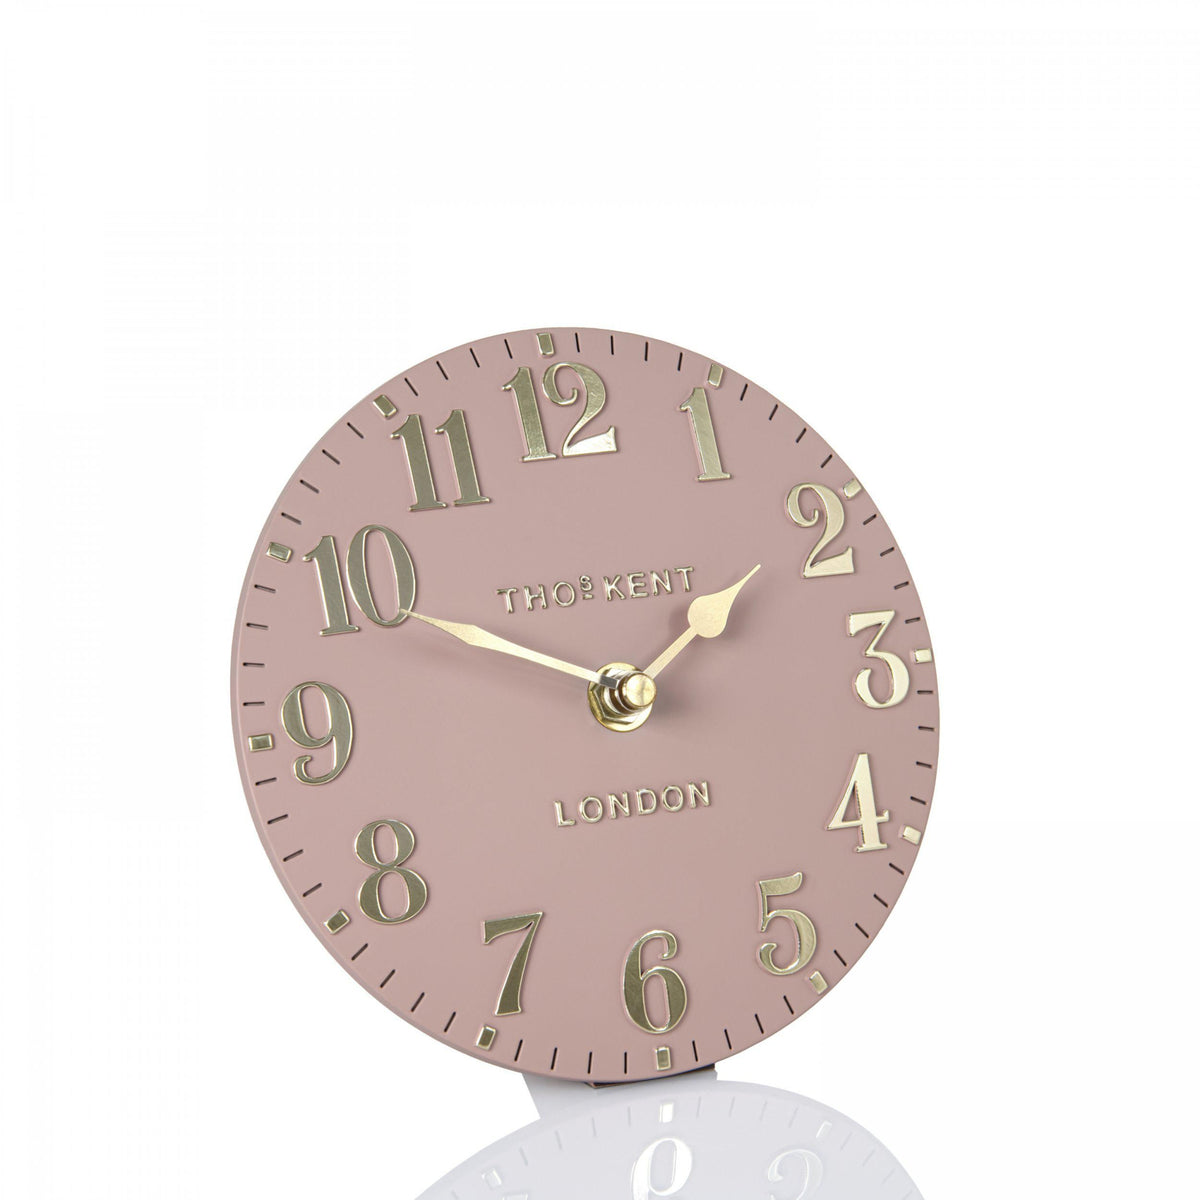 6" Arabic Mantel Clock Blush Pink